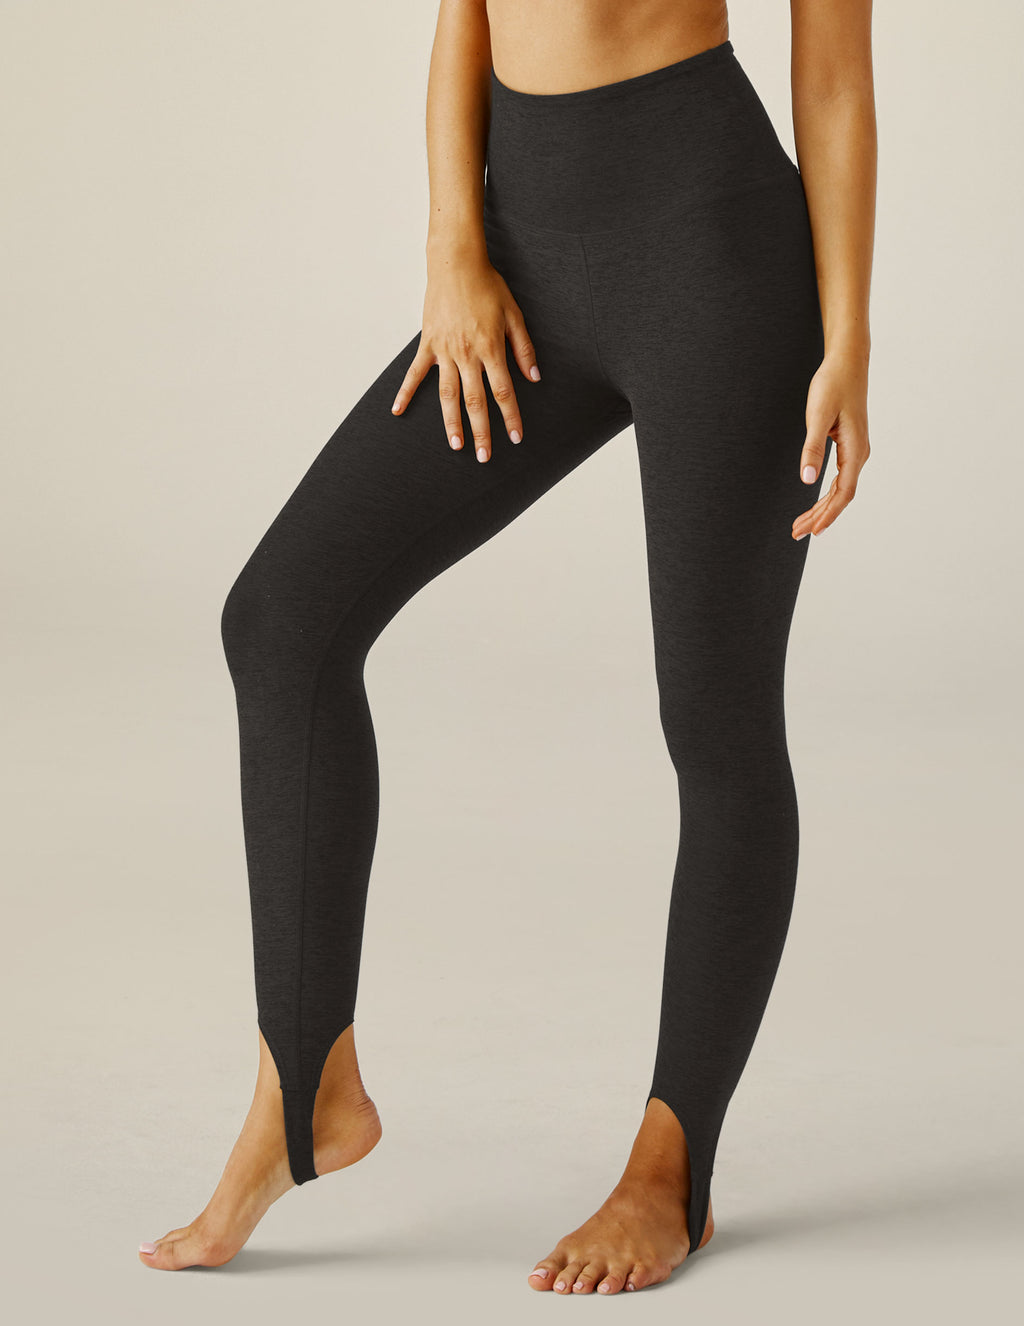 Buy LEMON Women's Plush Fleece Lined Legging, Charcoal, Large-X